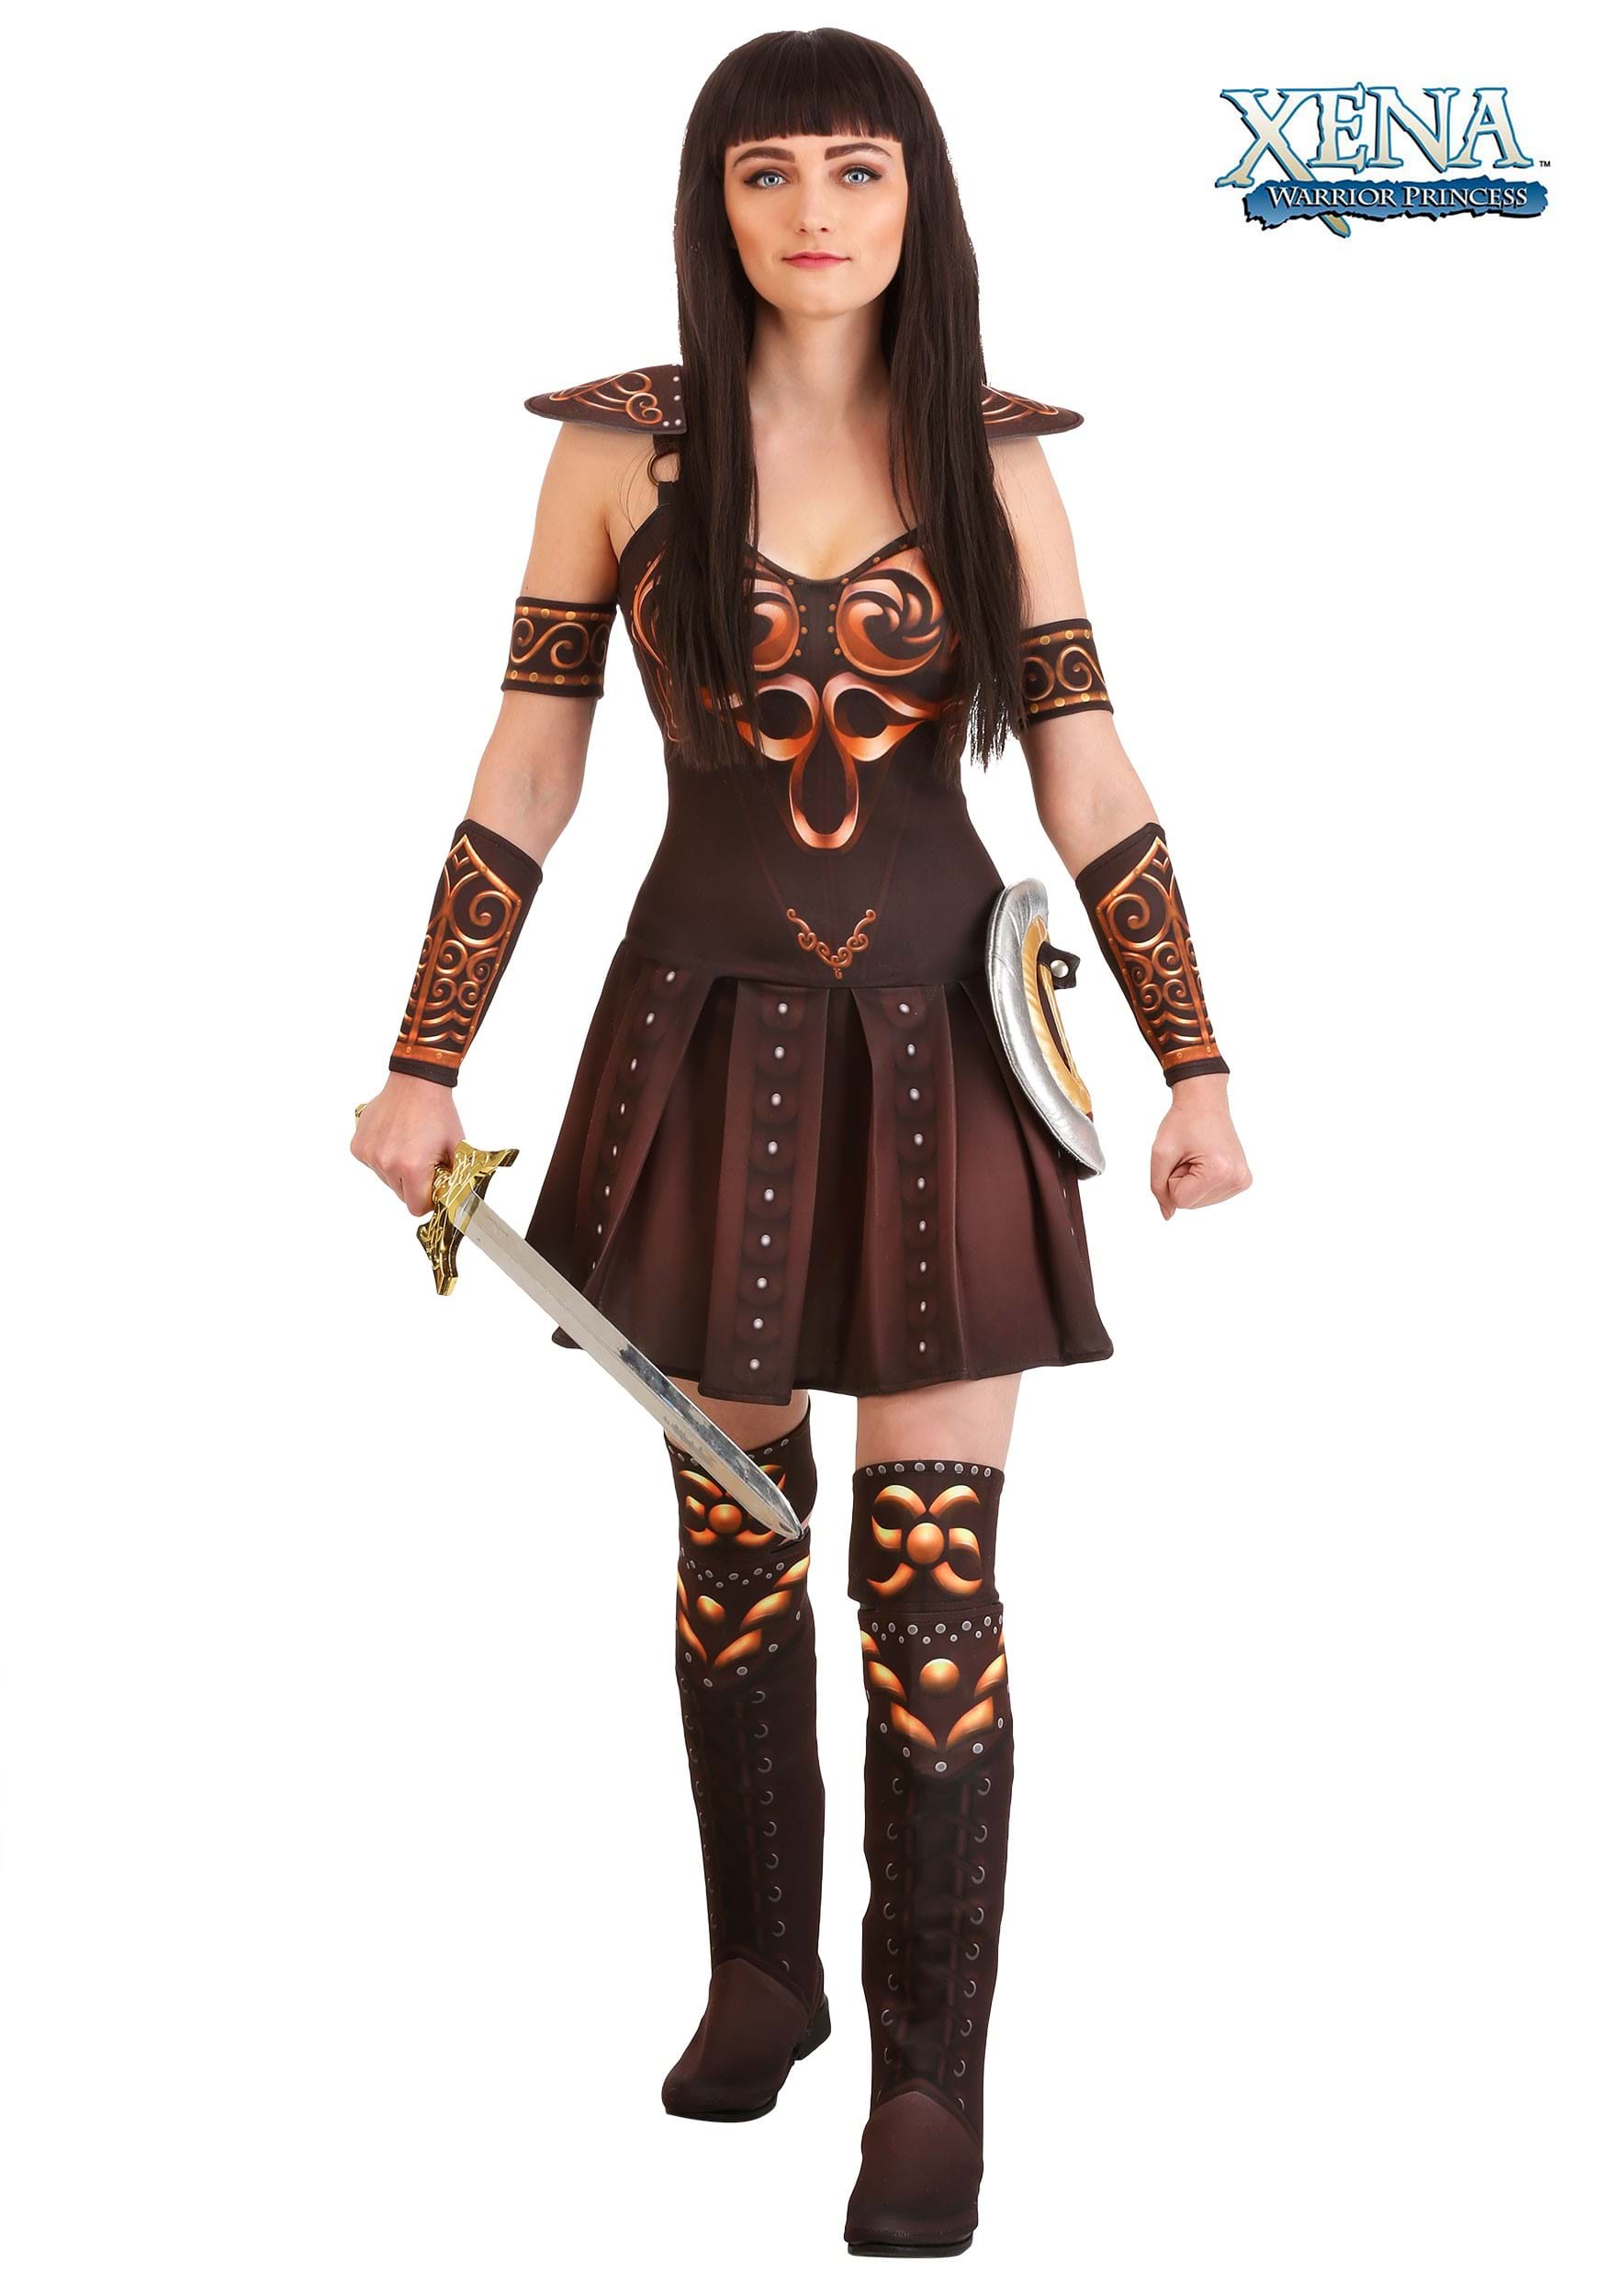 Women’s Xena Warrior Princess Costume